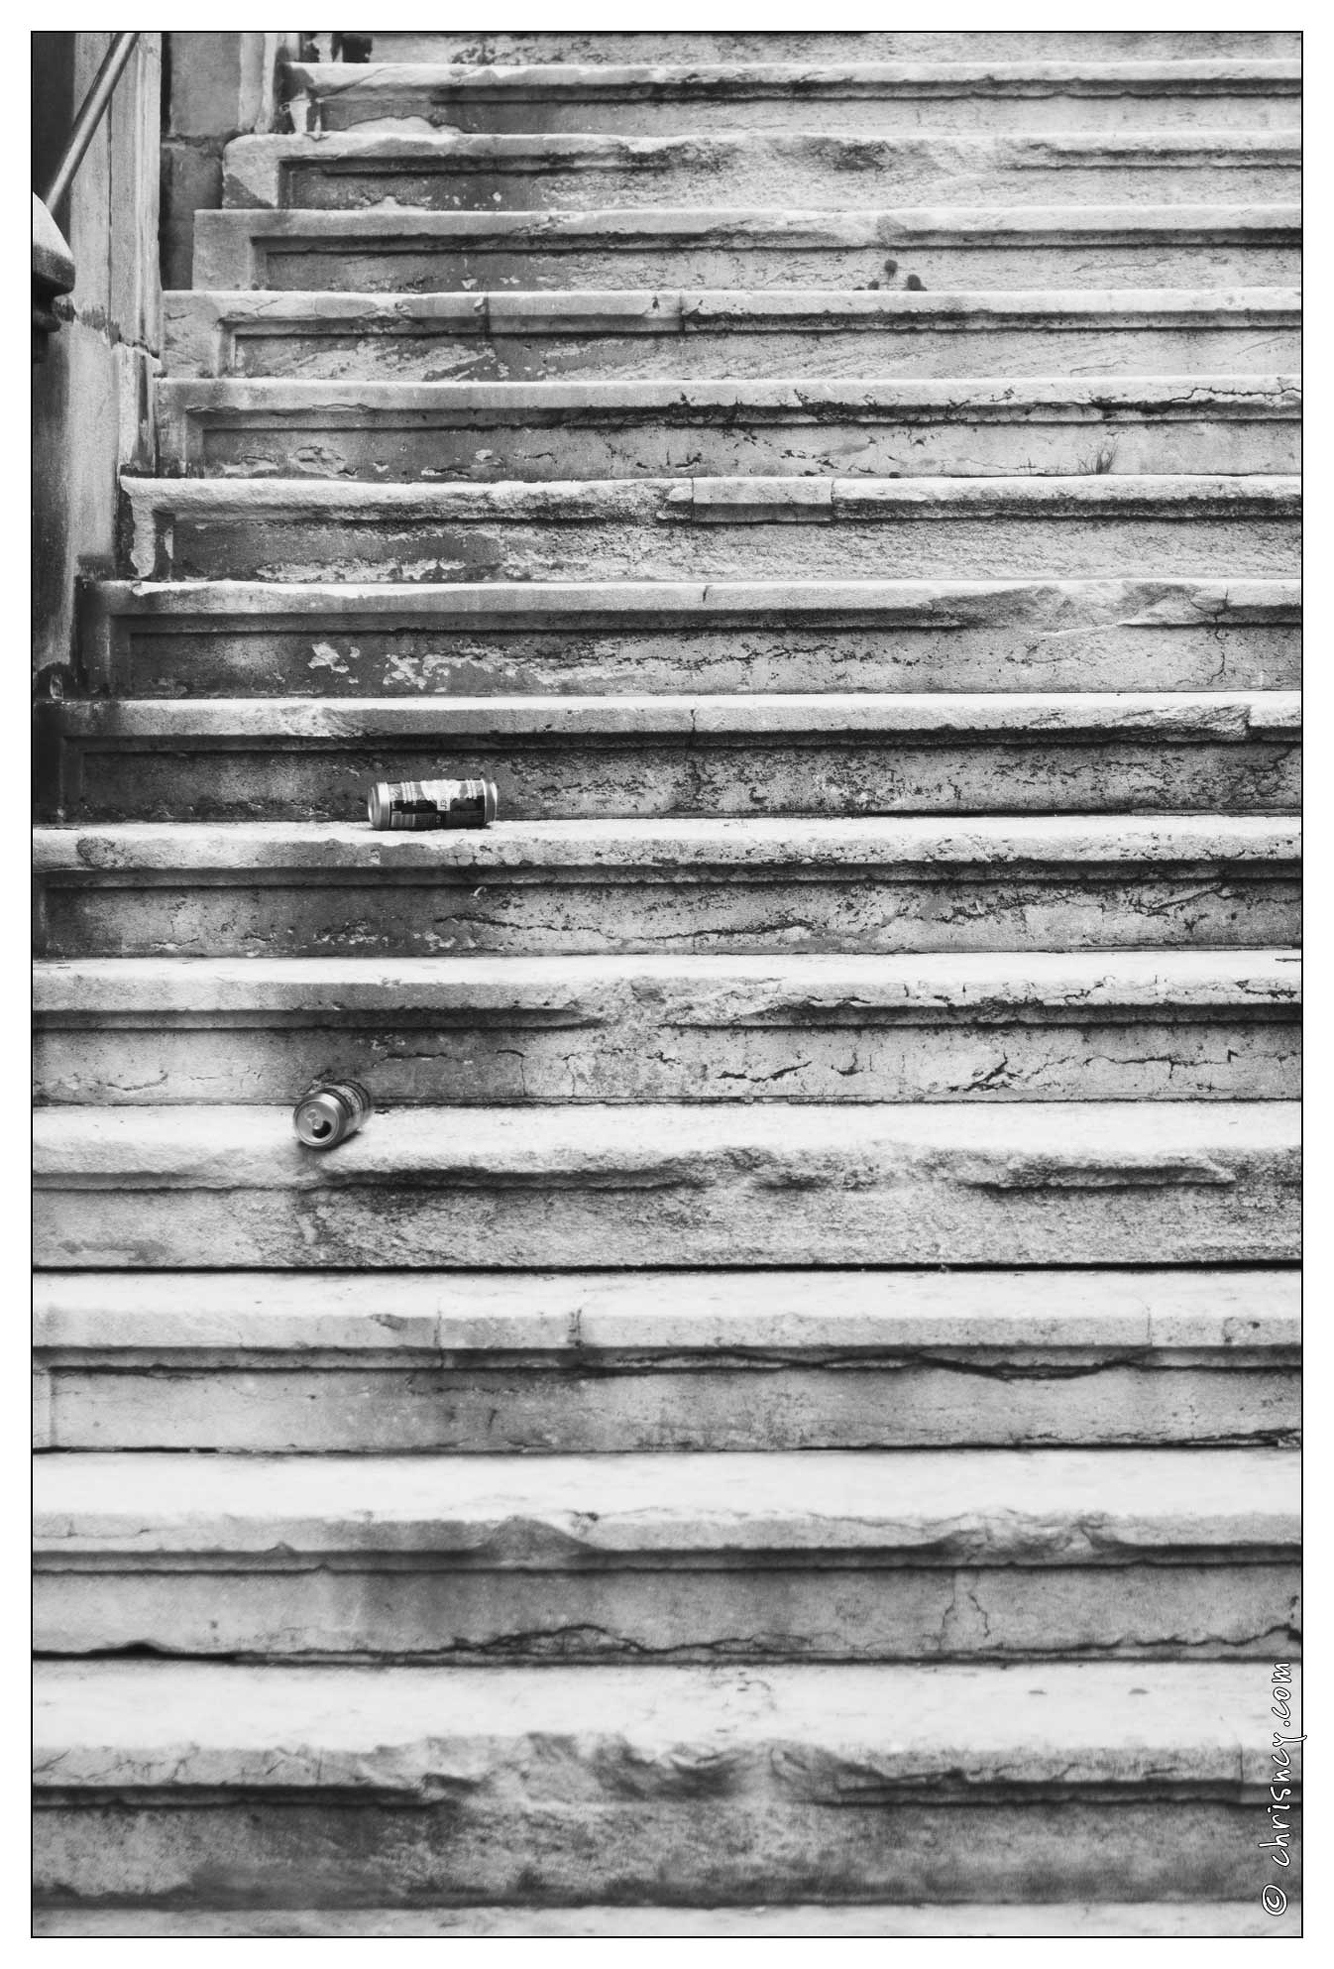 20101023-0167-escalier.jpg